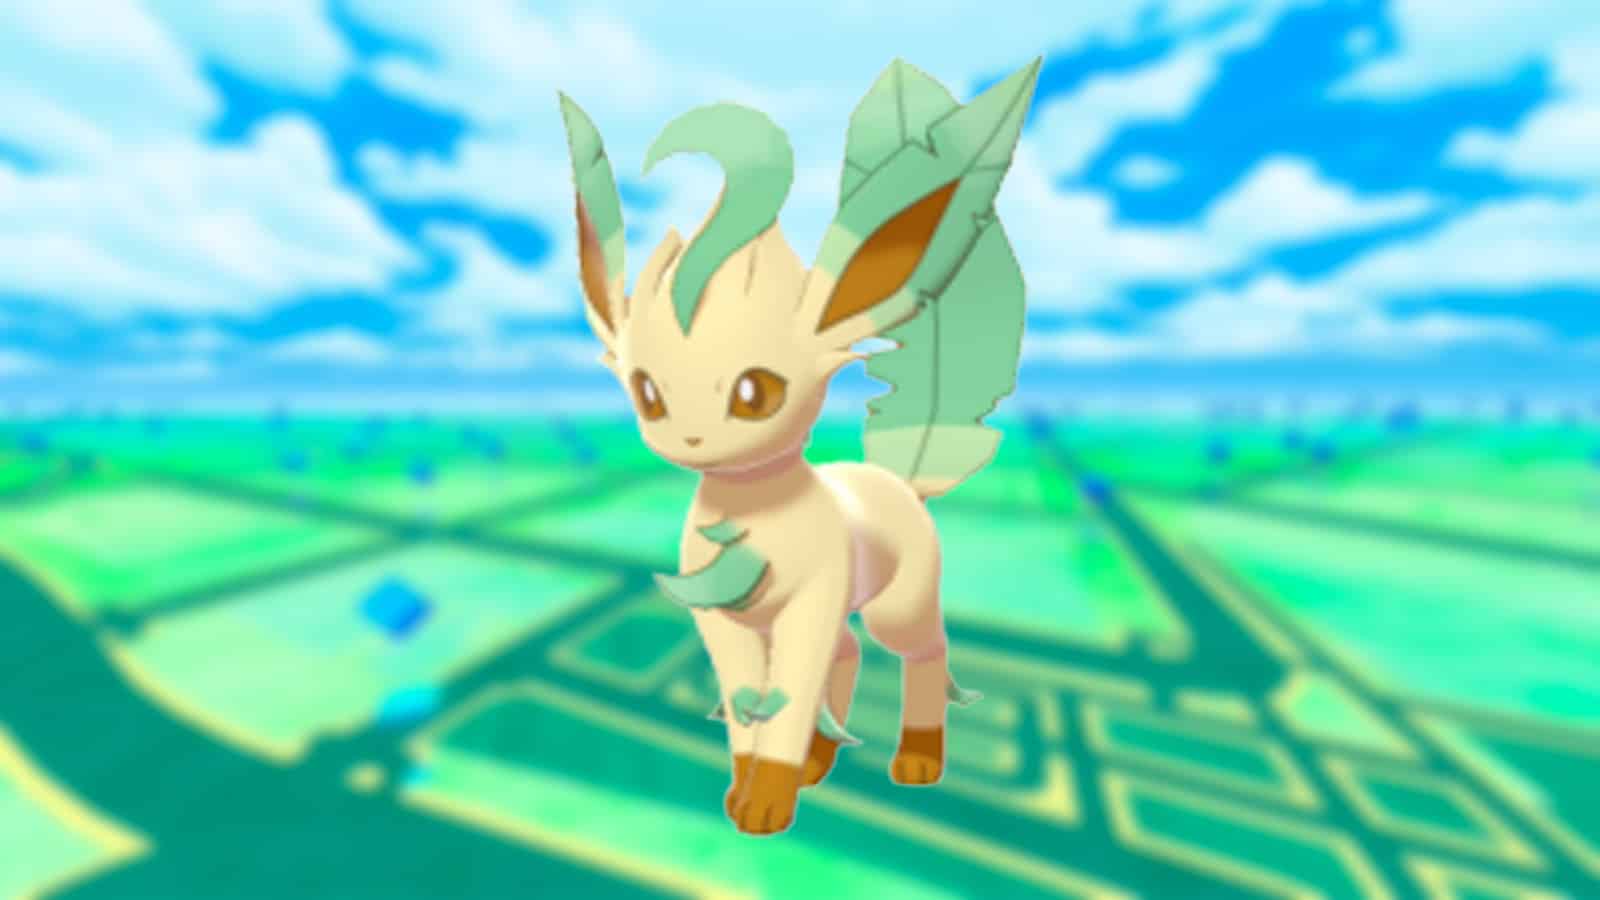 Leafeon one of the Eevee evolutions in Pokemon GO